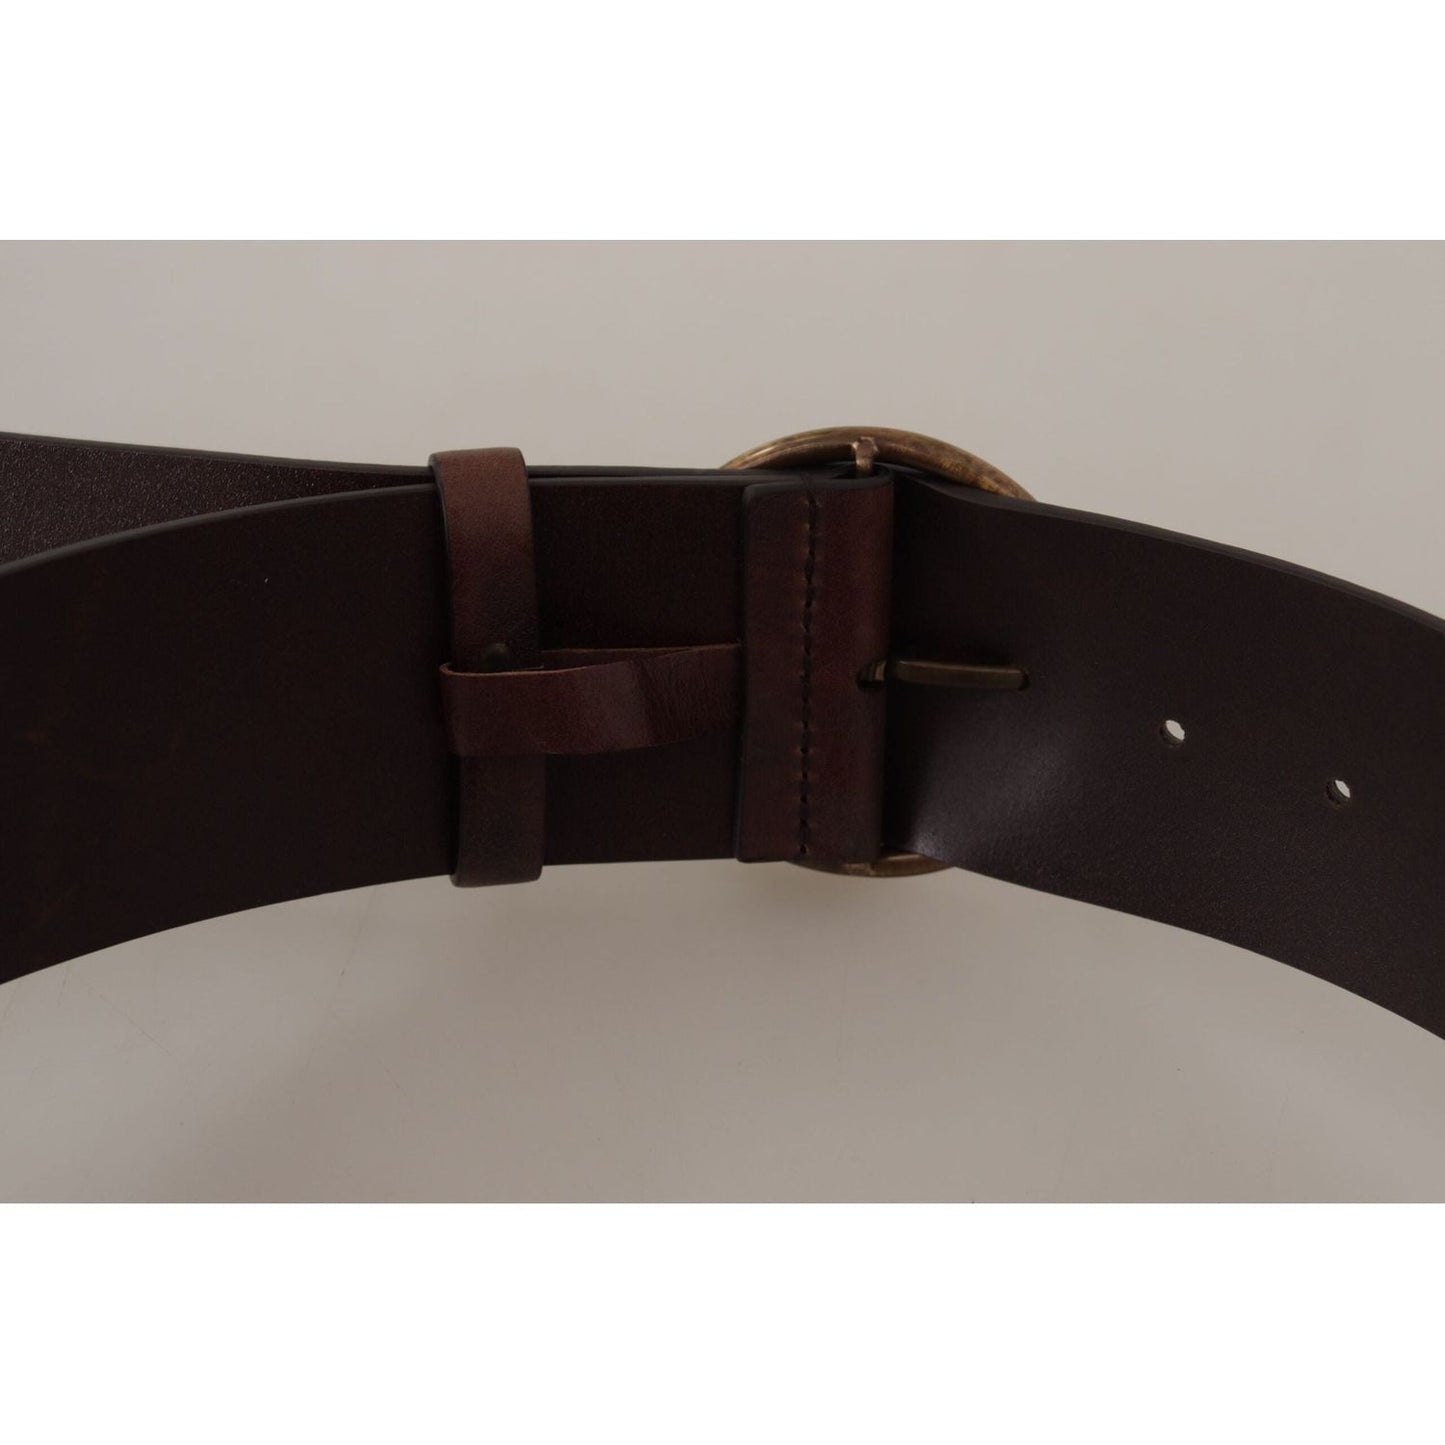 Dolce & Gabbana Elegant Leather Belt with Engraved Buckle dark-brown-wide-waist-leather-metal-round-buckle-belt IMG_9739-2-scaled-01b3f5ce-4c9.jpg